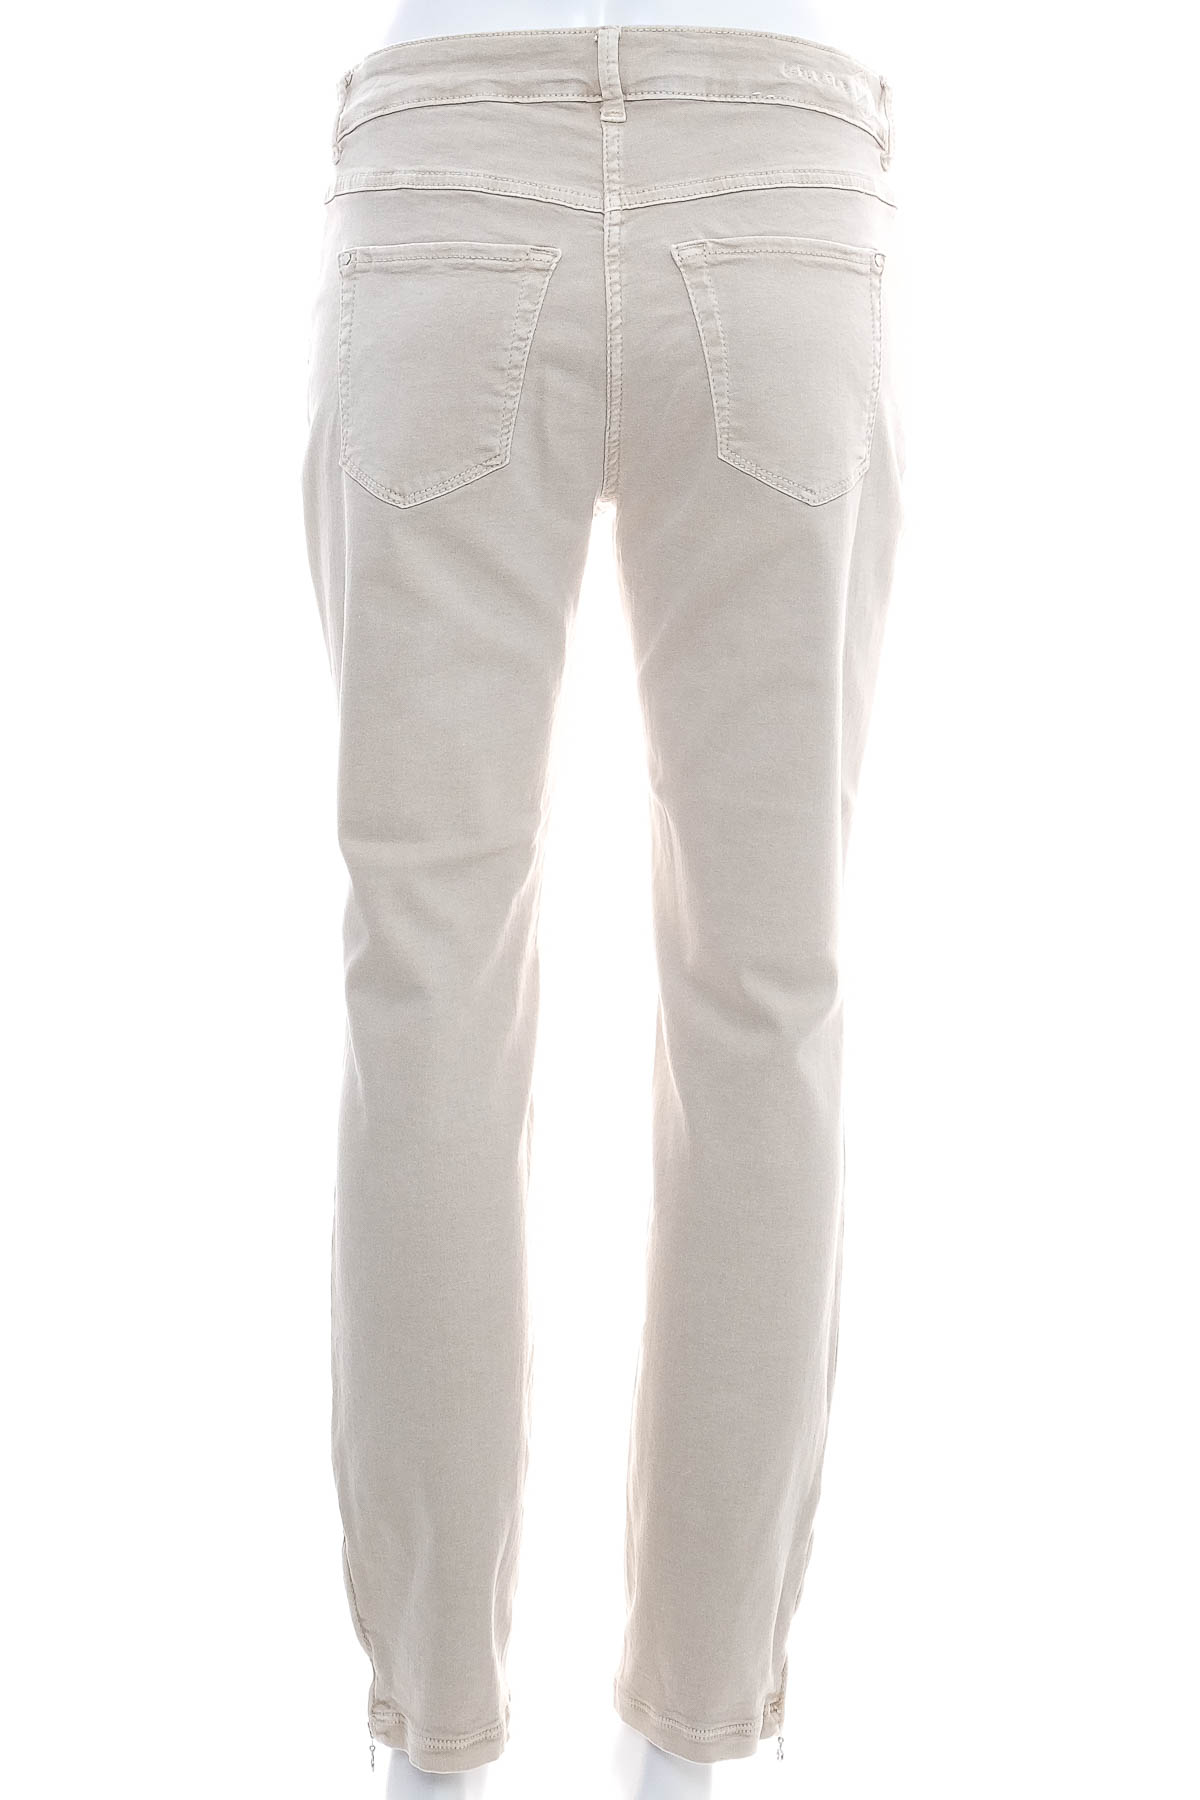 Pantaloni de damă - Dream Jeans by MAC - 1